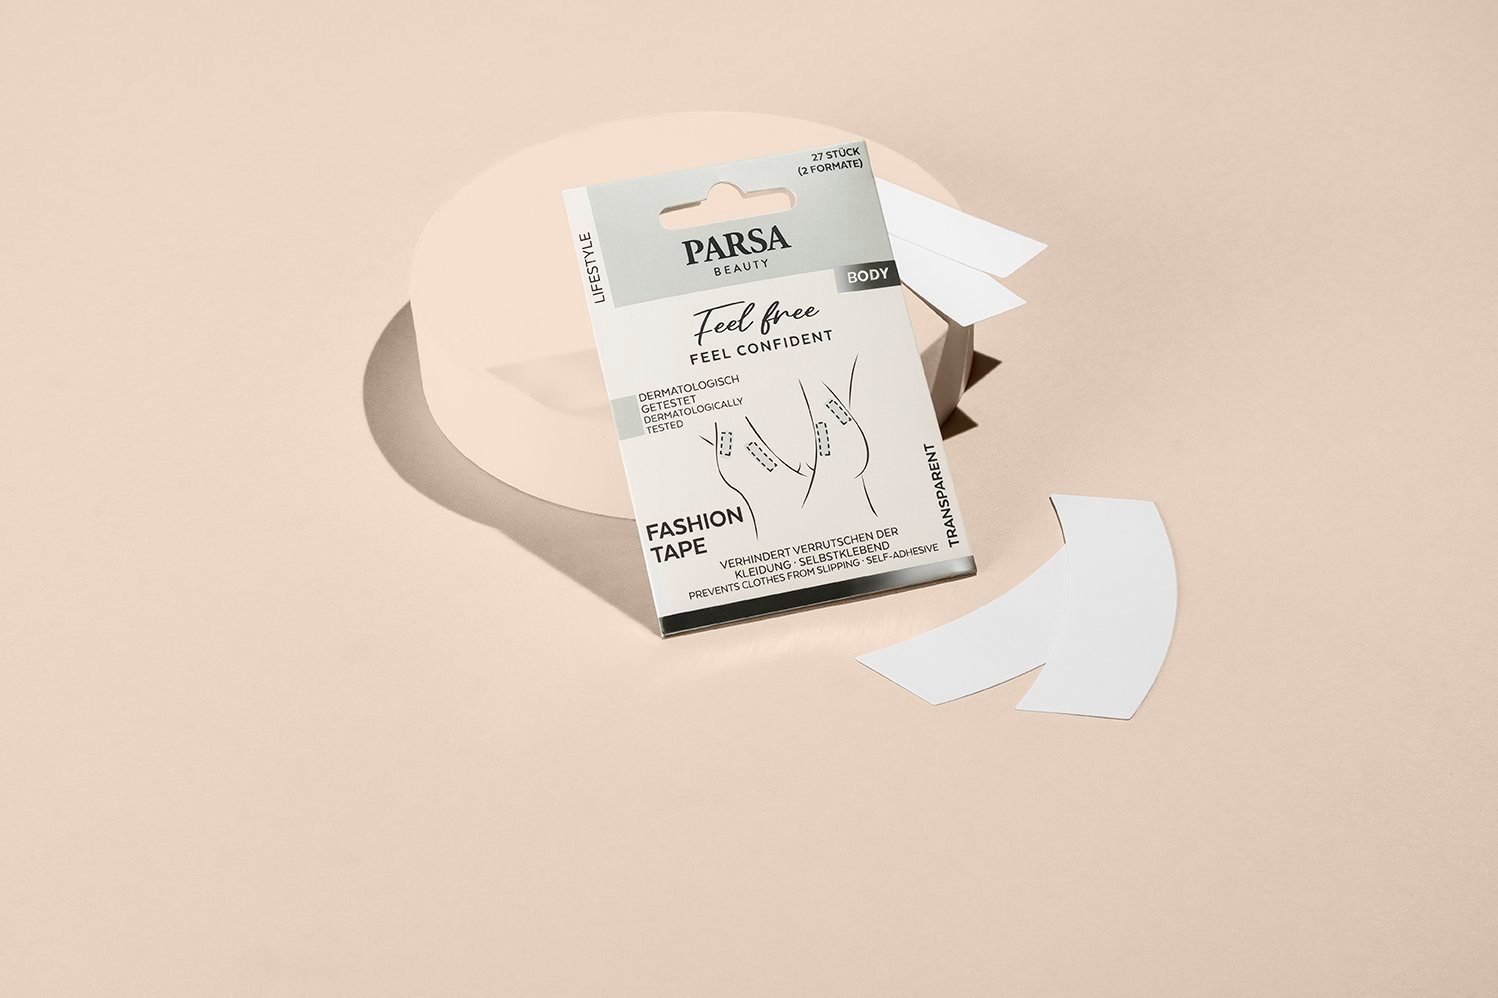 PARSA Beauty Set: Klebe-BH PARSA Beauty Fashion Tape - 27 Stück a 8,5cm